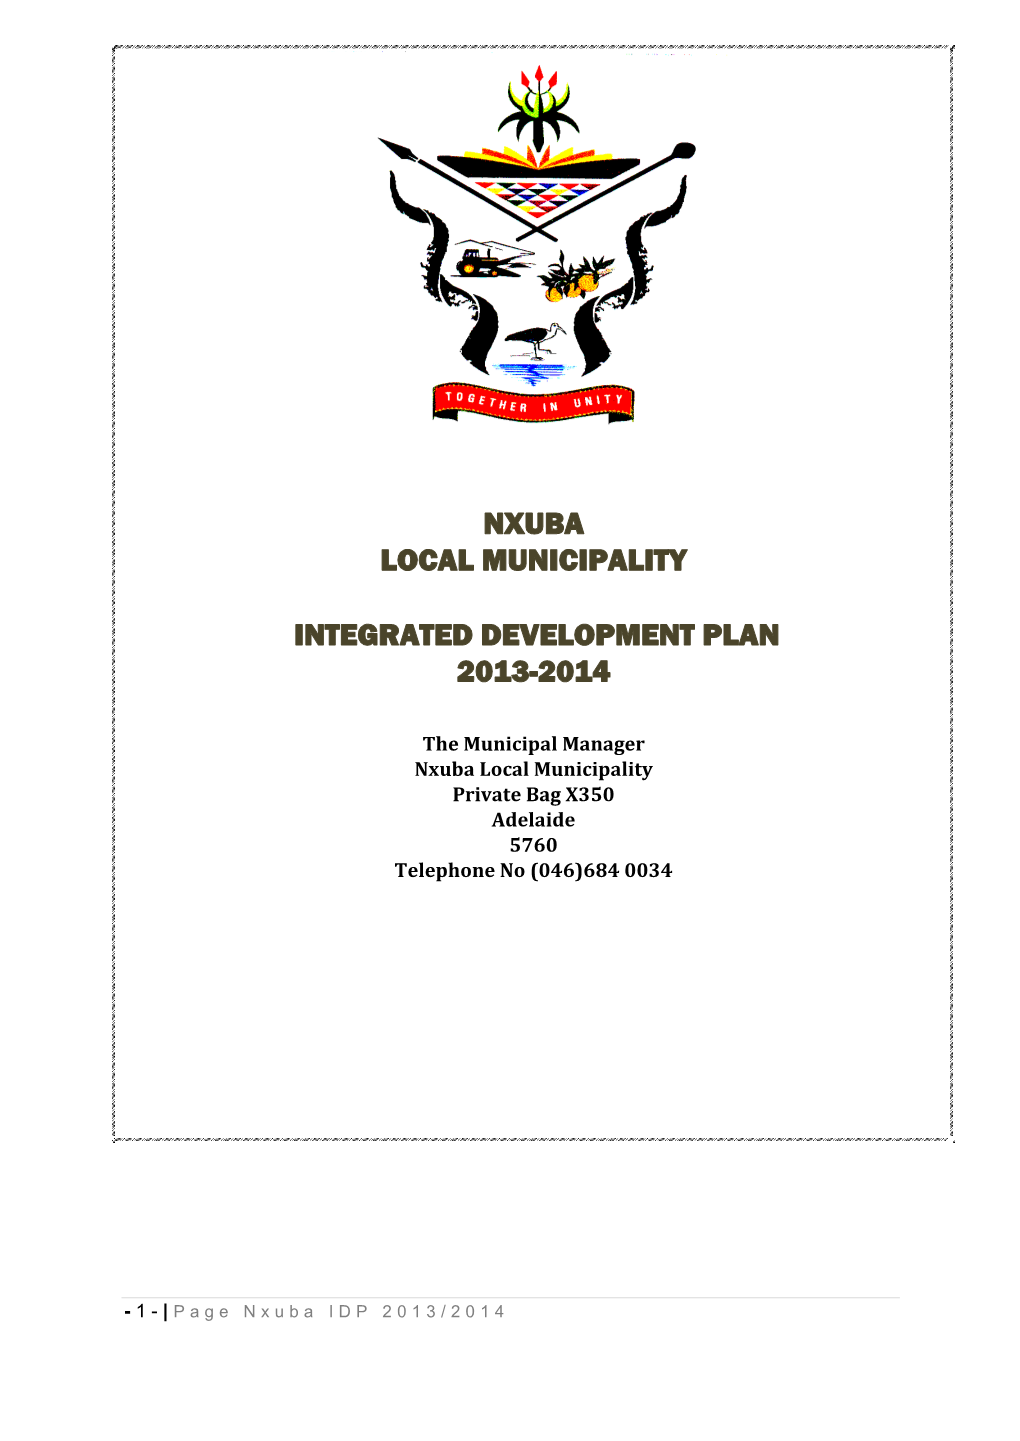 Nxuba Local Municipality Integrated Development Plan 2013-2014